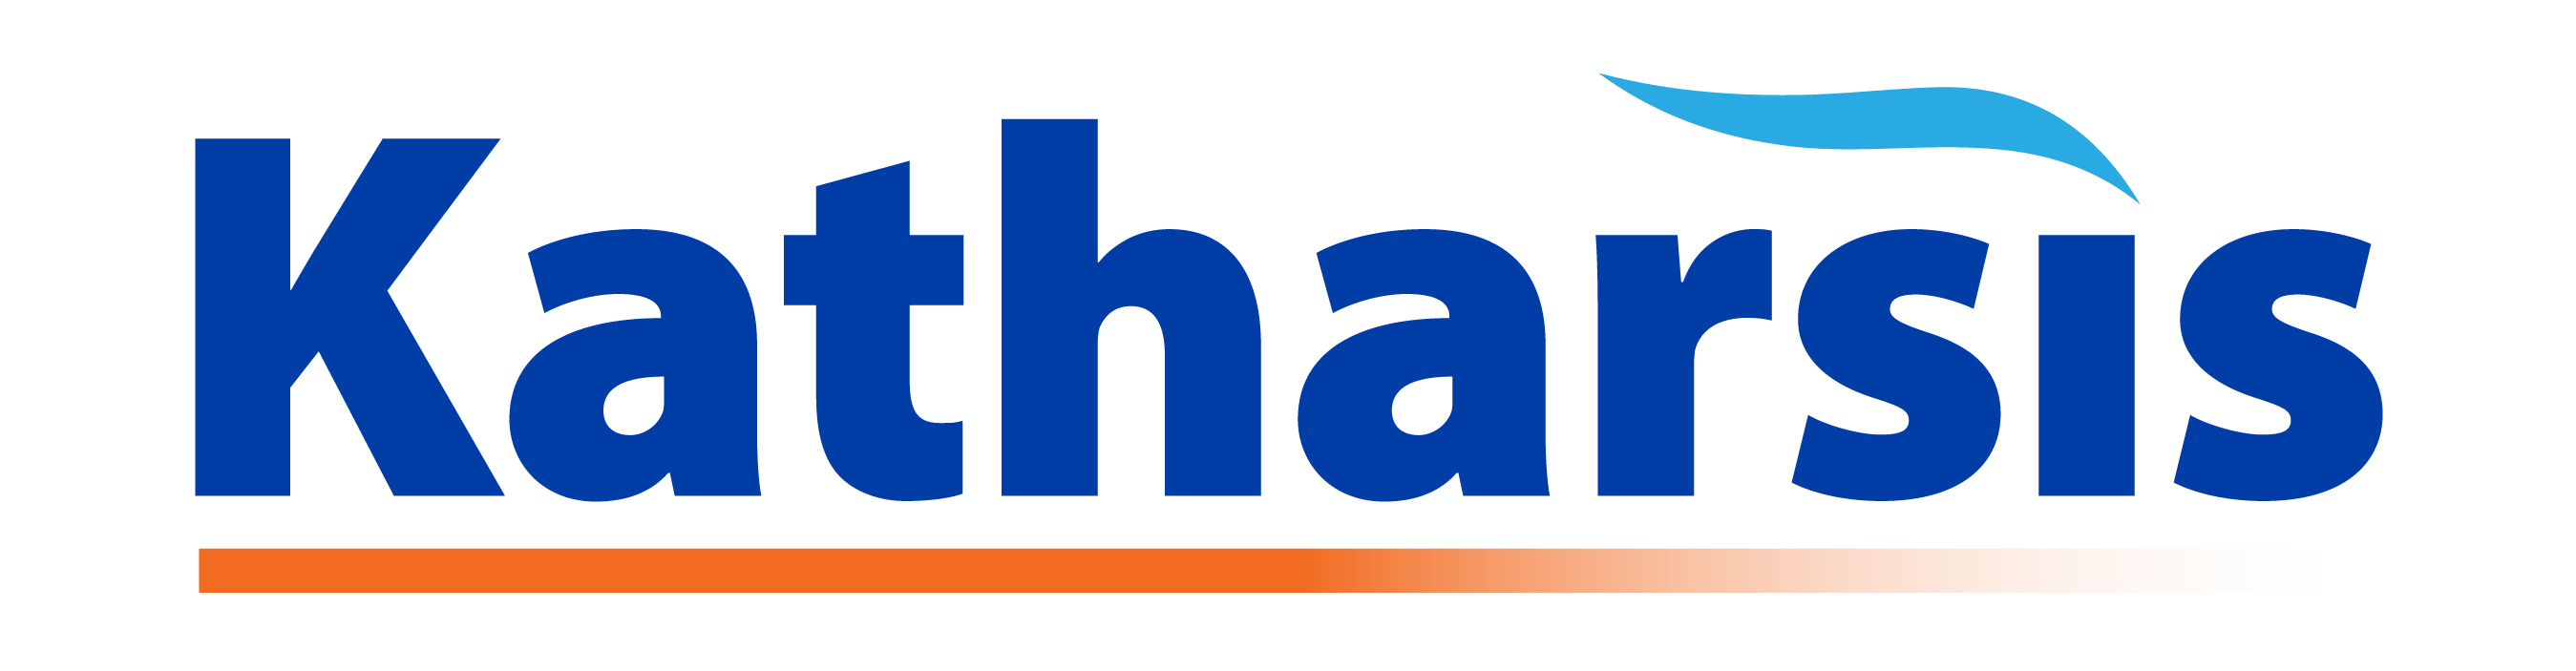 Katharsis Logo Air Filtration Ventilation